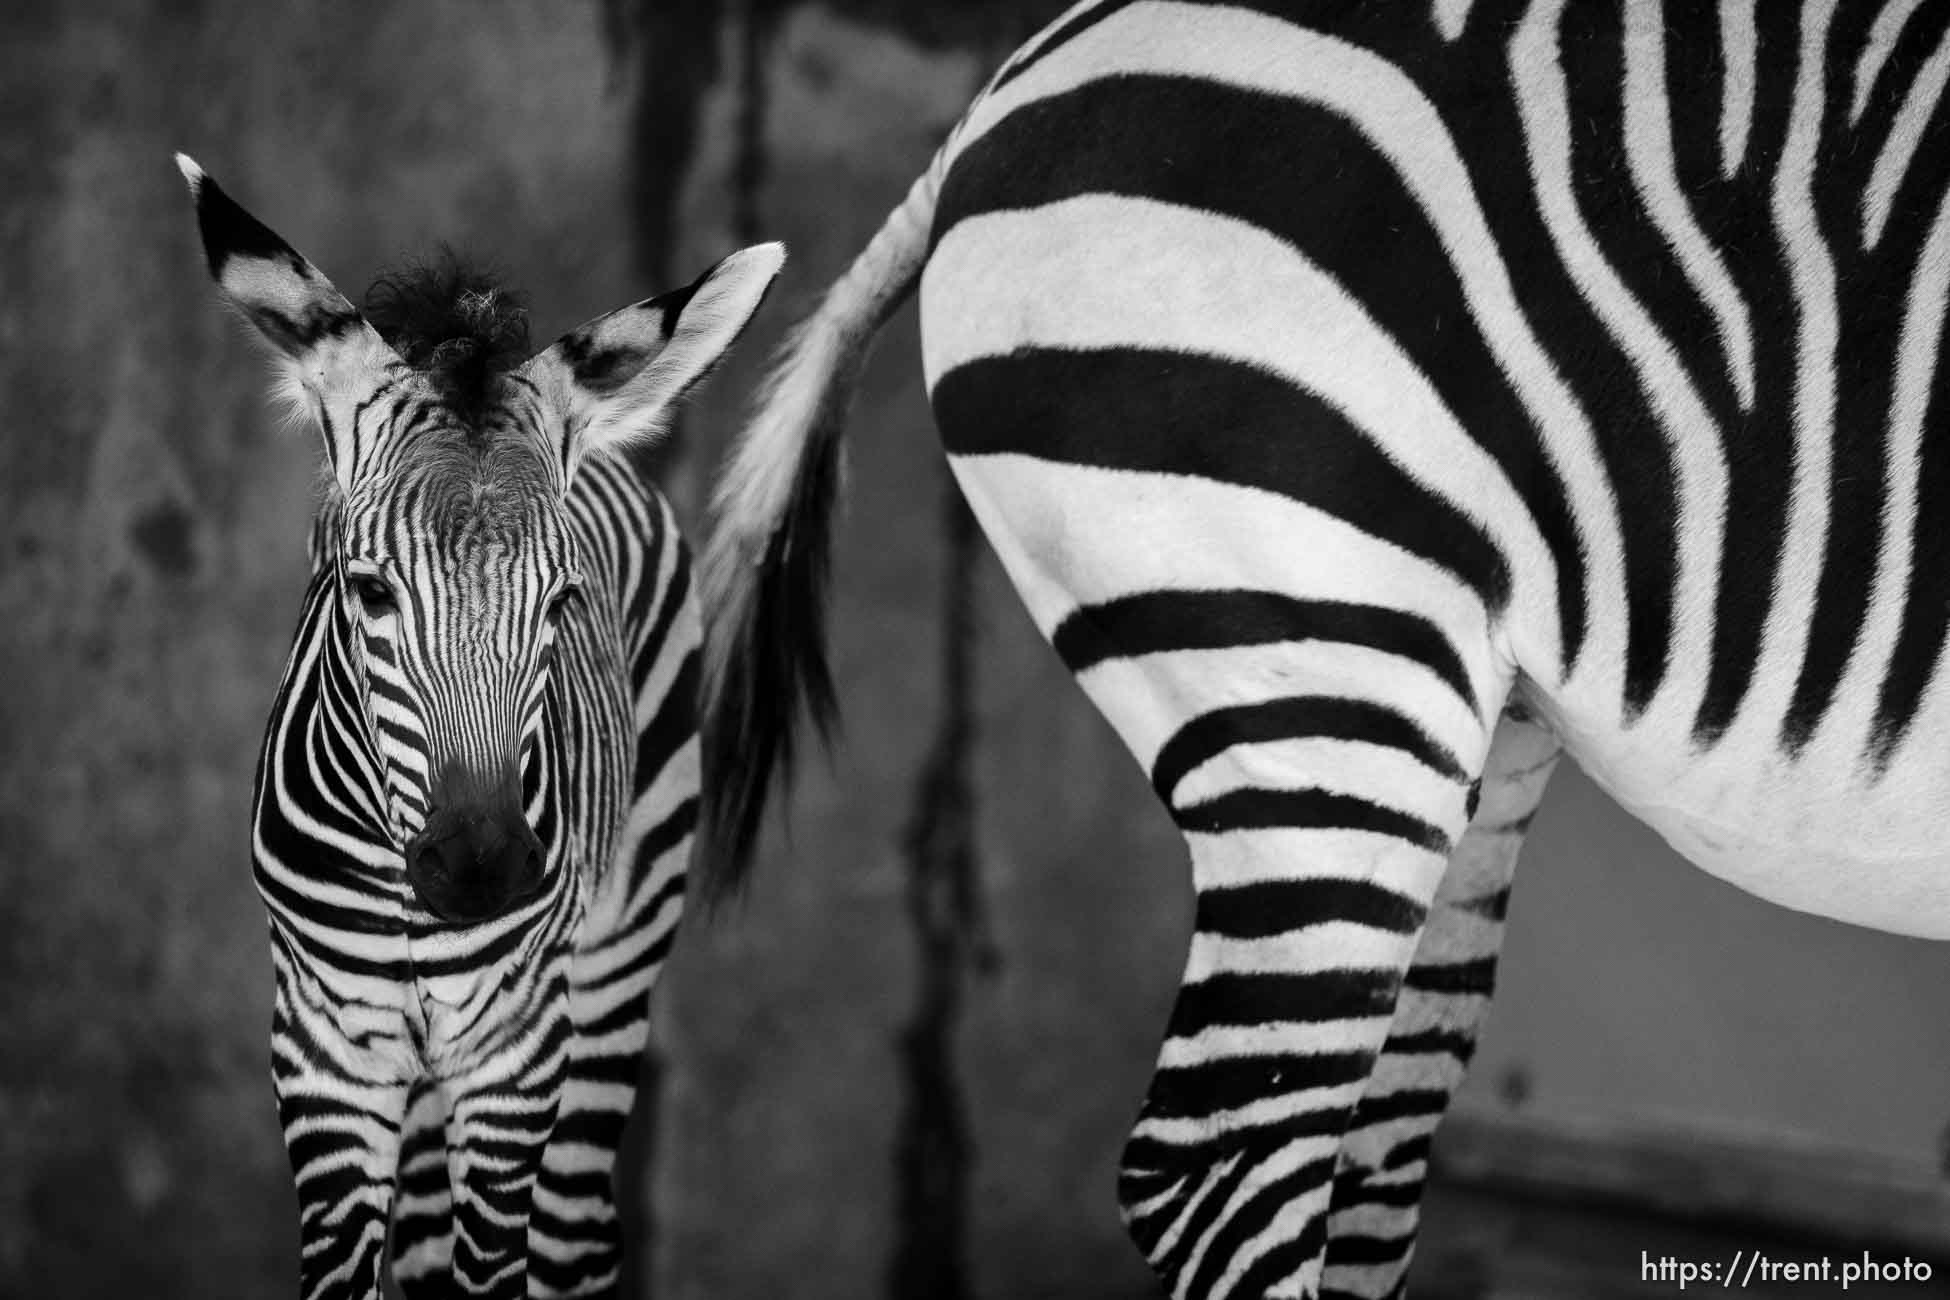 (Trent Nelson  |  The Salt Lake Tribune) The new baby Zebra born on June 2 to mother Ziva at Hogle Zoo in Salt Lake City, on Wednesday, June 7, 2023.